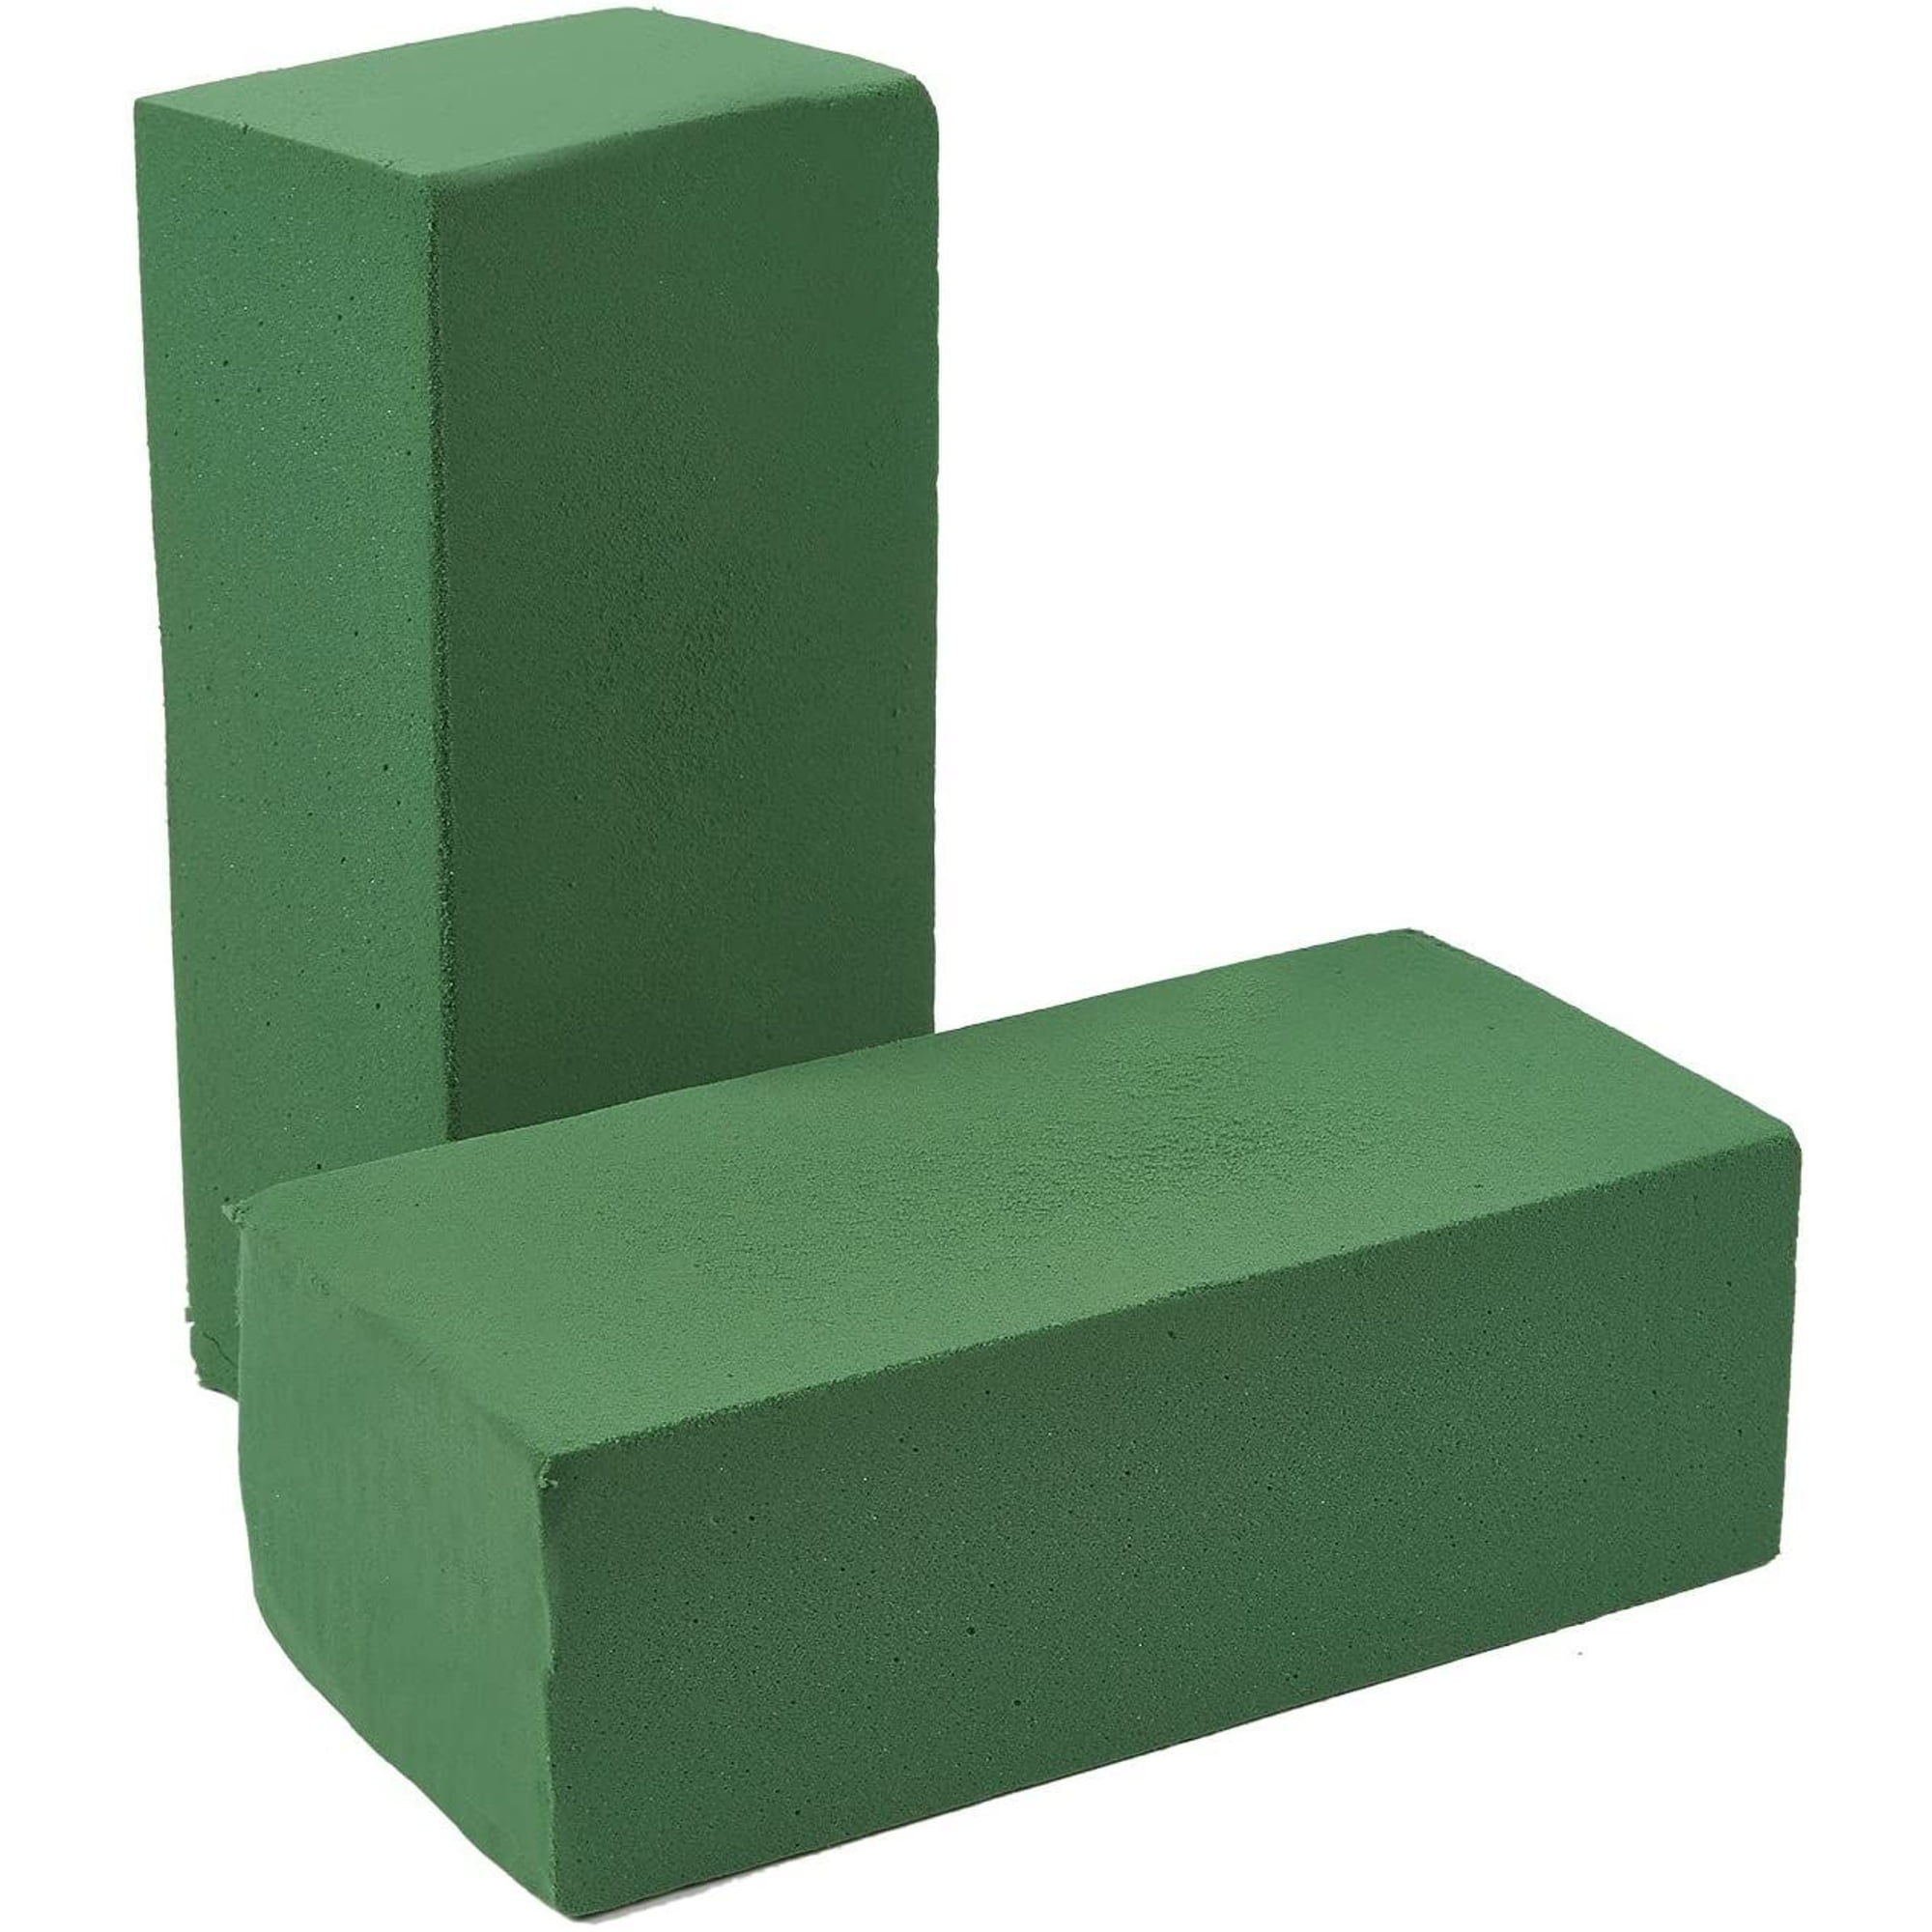 Box of 48pcs Grade A Wet Floral Foam Blocks/Bricks for Fresh